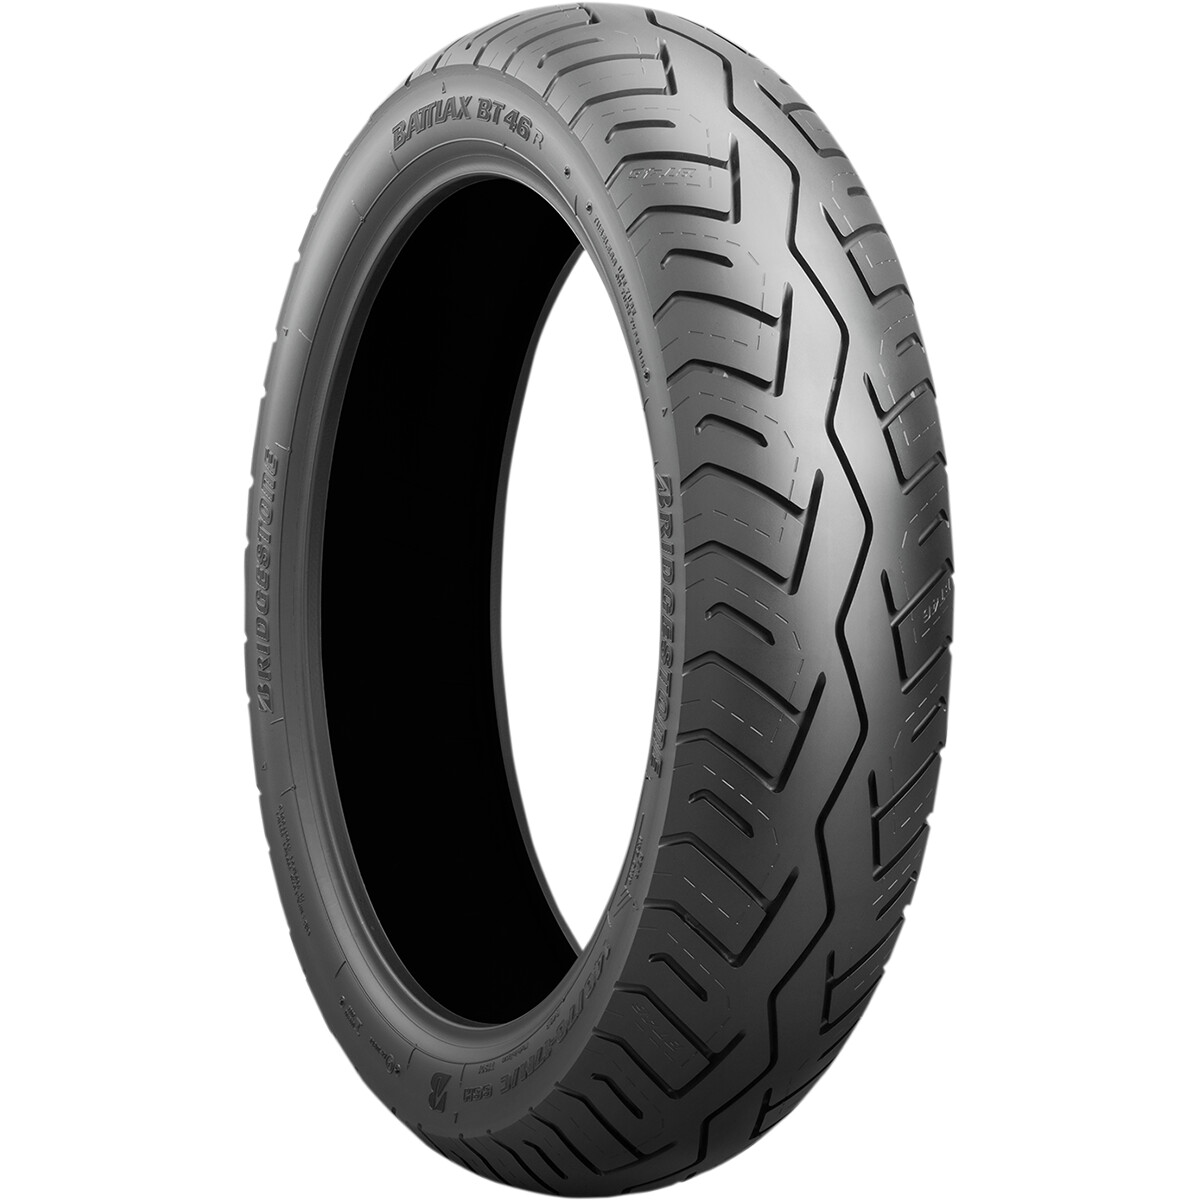 Bridgestone BT46 R 140/80-17 69V tubeless Cafè racer motorcycle rubber tire